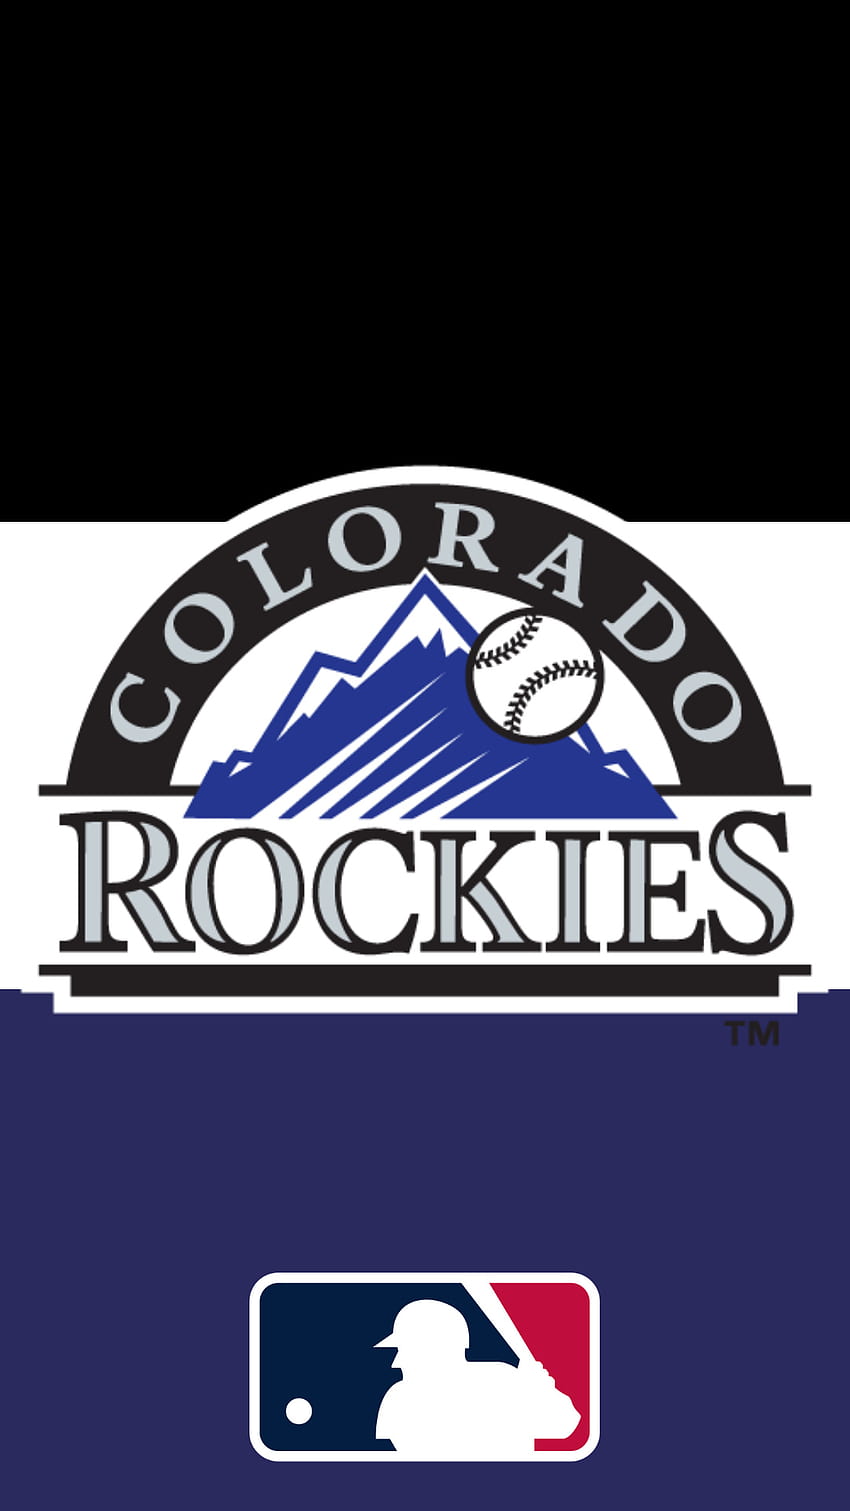 Download Iphone Xs Max Colorado Rockies Wallpaper - Colorado Rockies  Baseball PNG Image with No Background - PNGkey.com